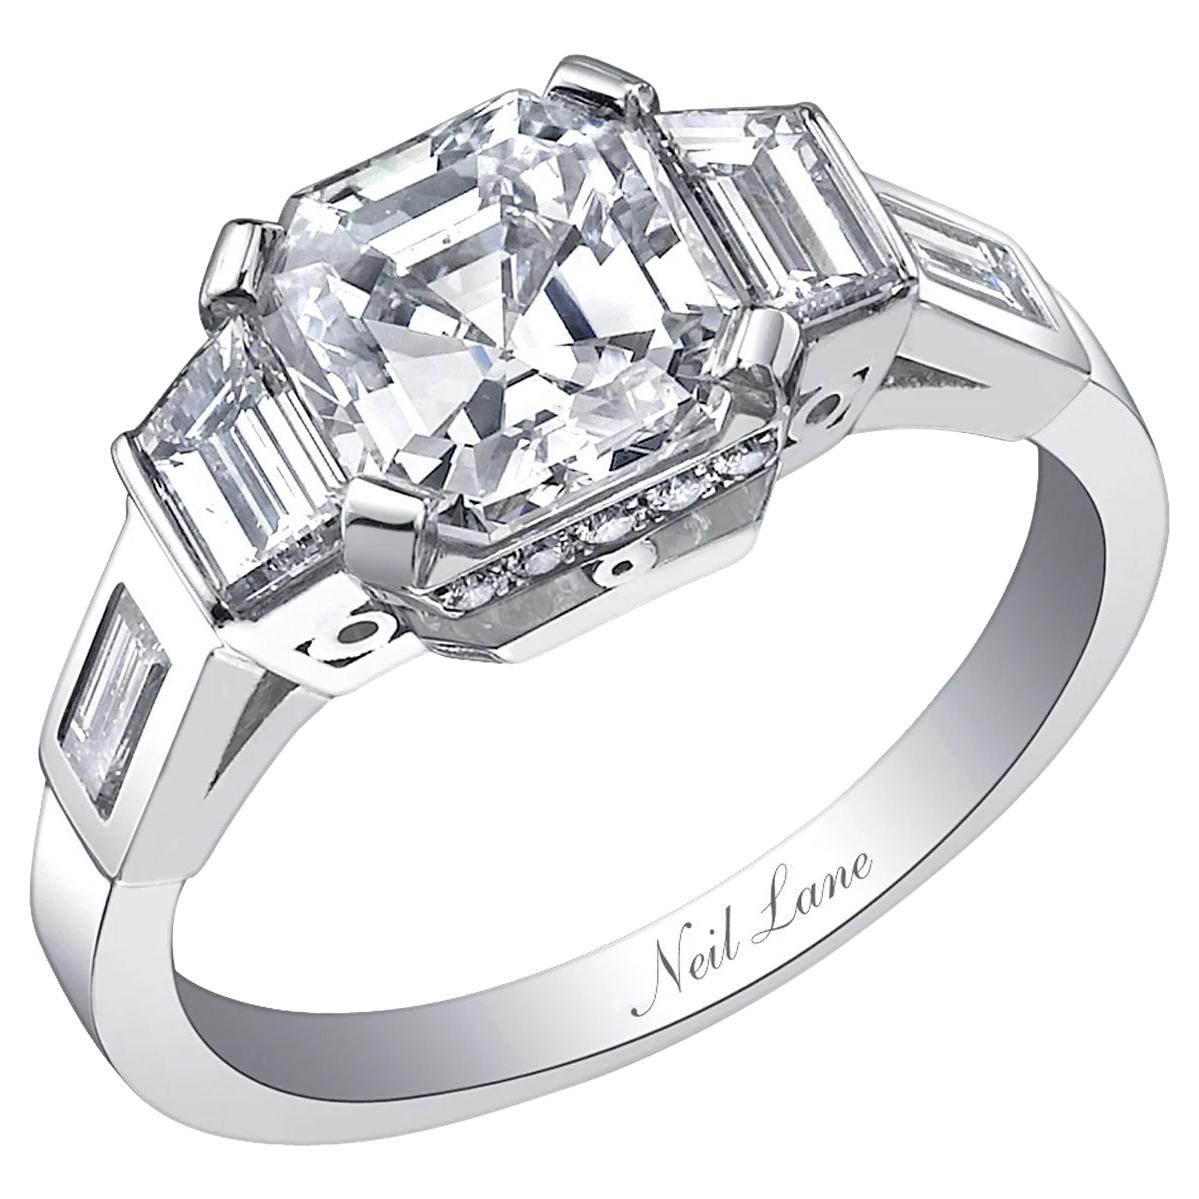 Neil Lane Couture Design Art Deco Style Square Emerald-Cut Diamond Platinum Ring For Sale